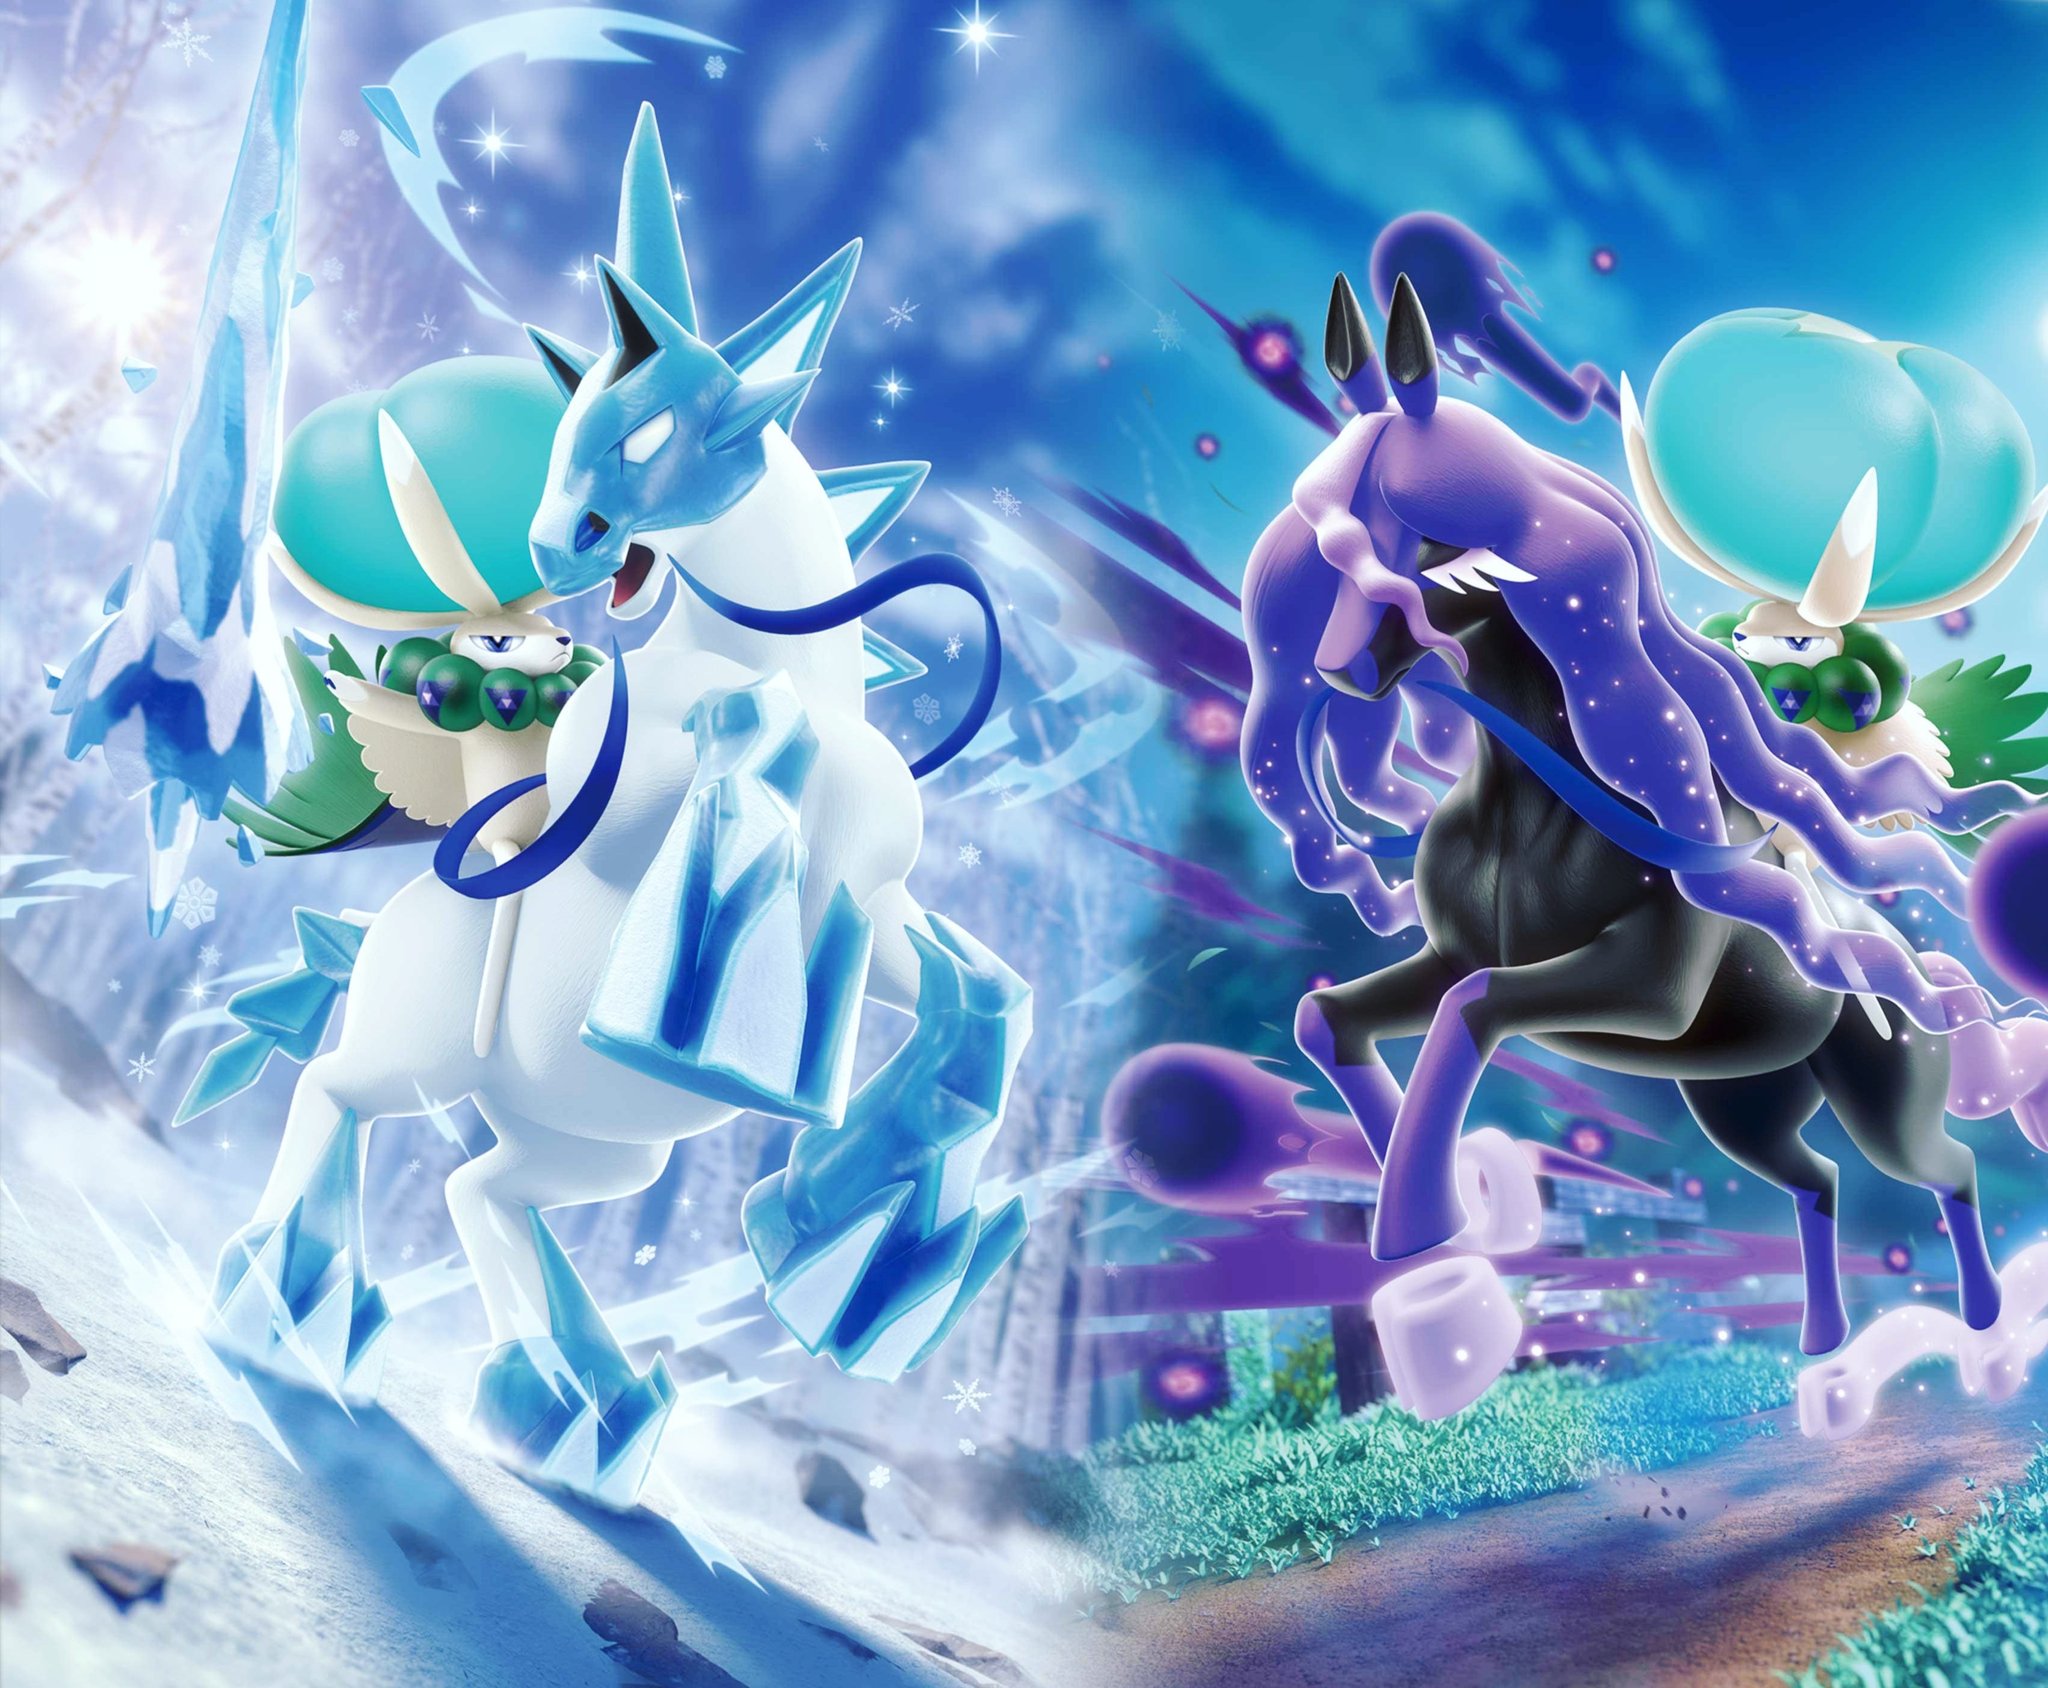 Pokéshopper.com Picture, New high quality Pokémon TCG artwork featuring Calyrex, Glastrier and Spectrier